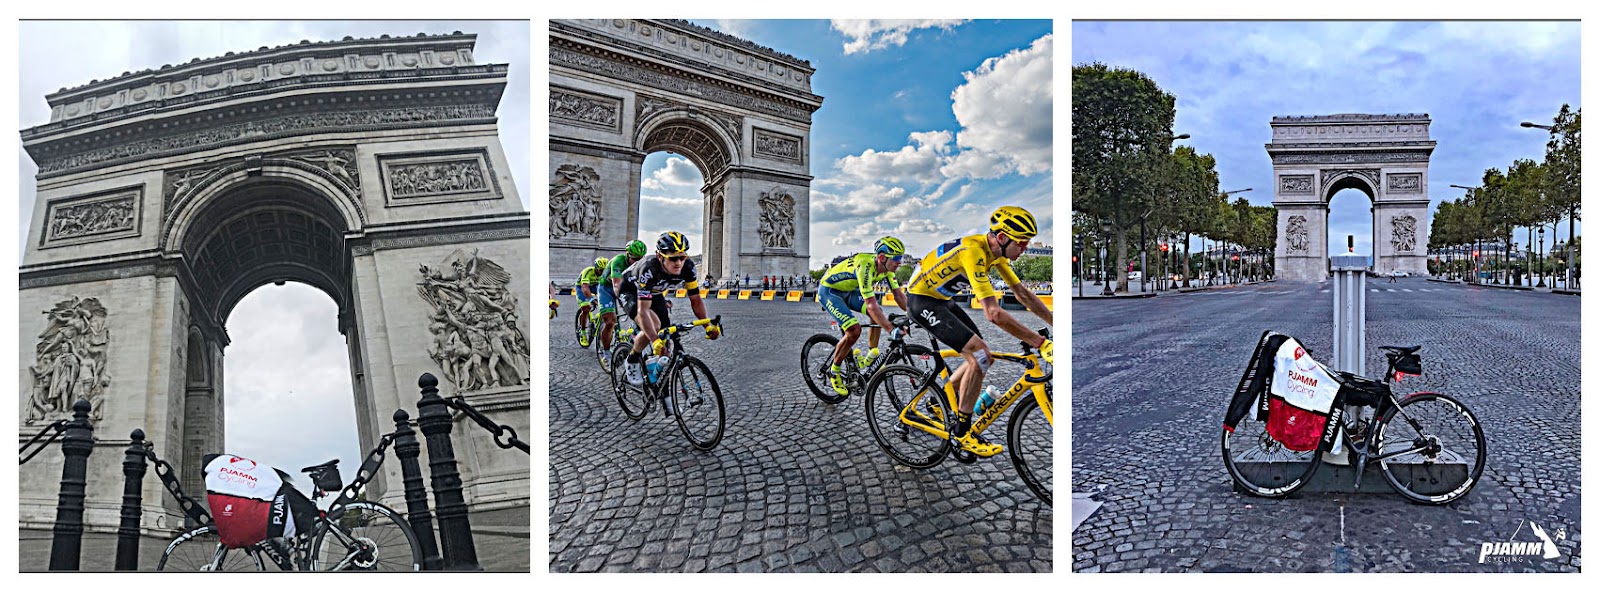 Tour de France 2022 - photo collage, PJAMM bike and jersey leaning against post in front of Arc de Triomphe, Paris; riders in the Tour de France ride past the Arc de Triompth